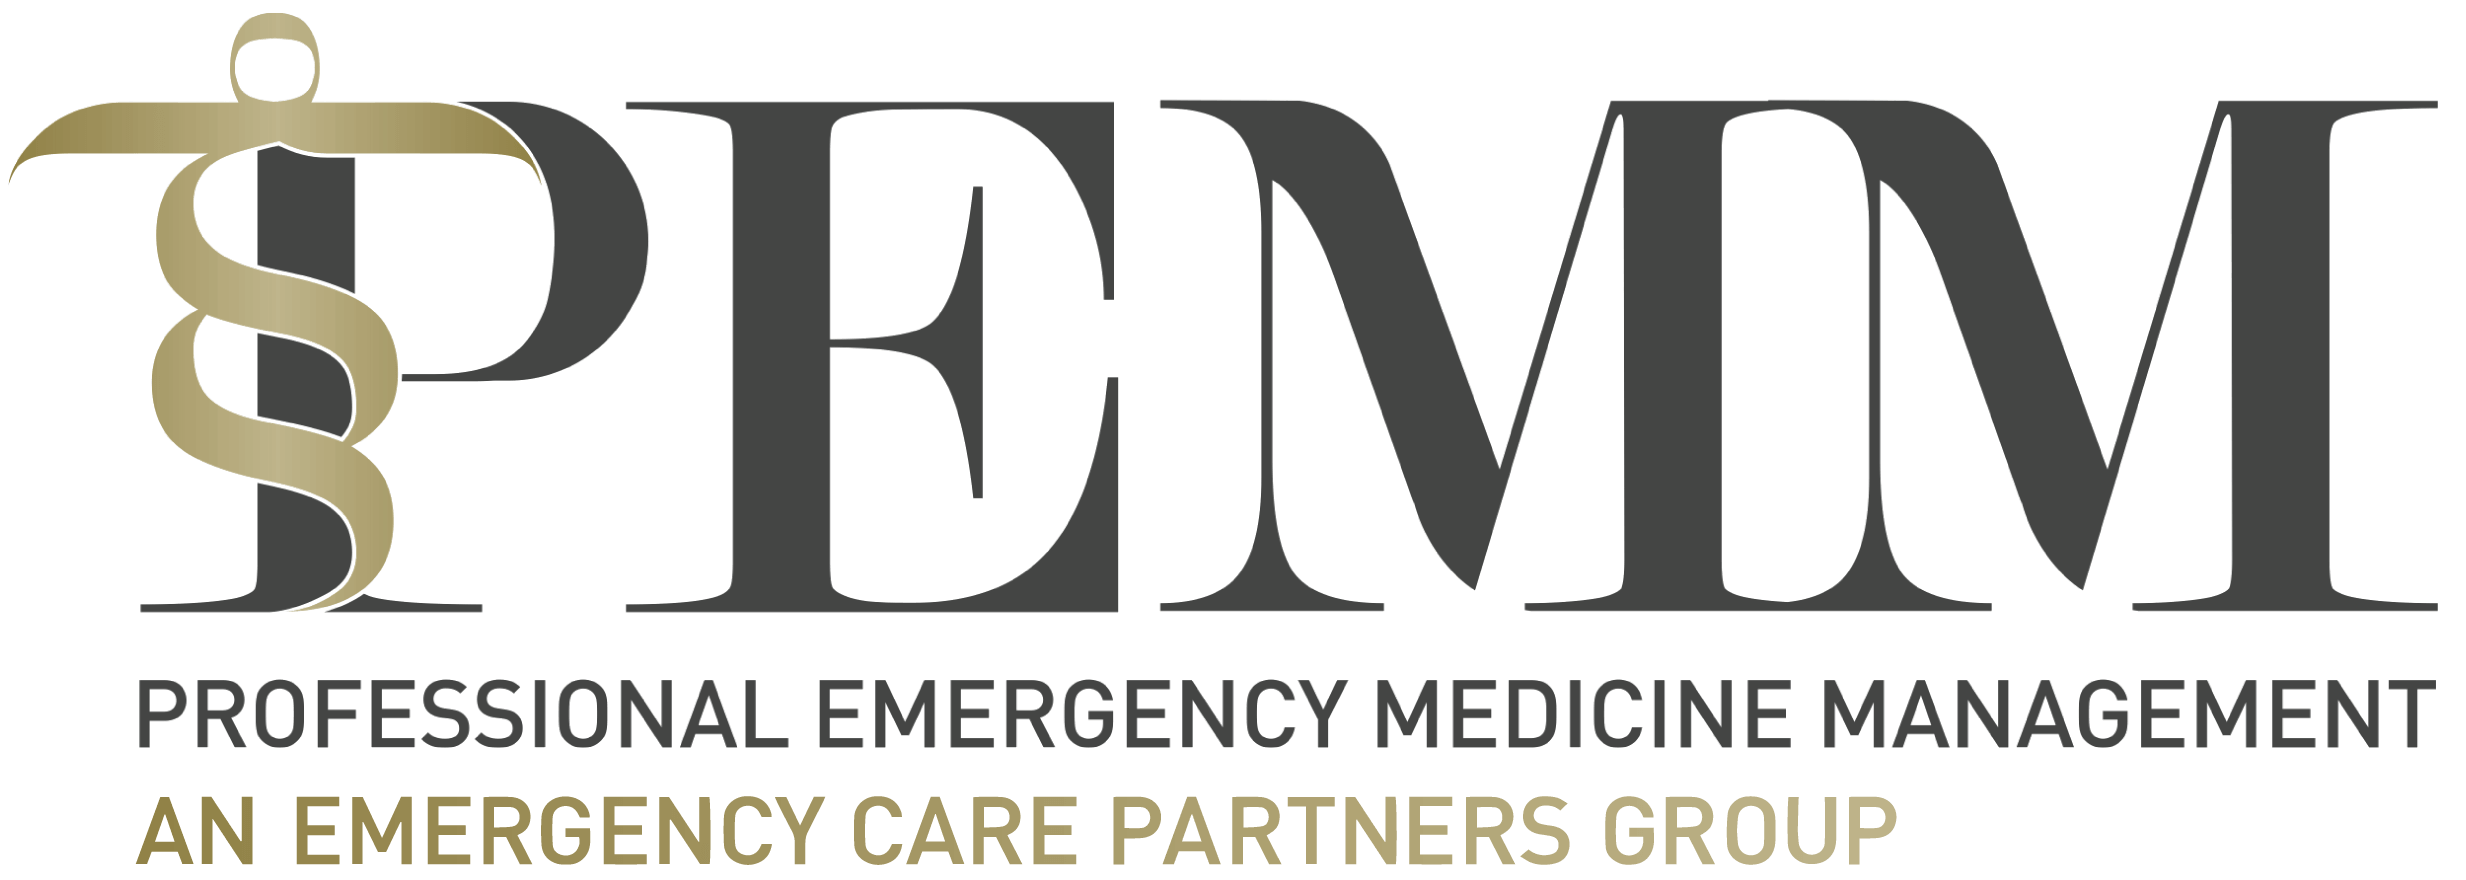 Professional Emergency Medicine Management